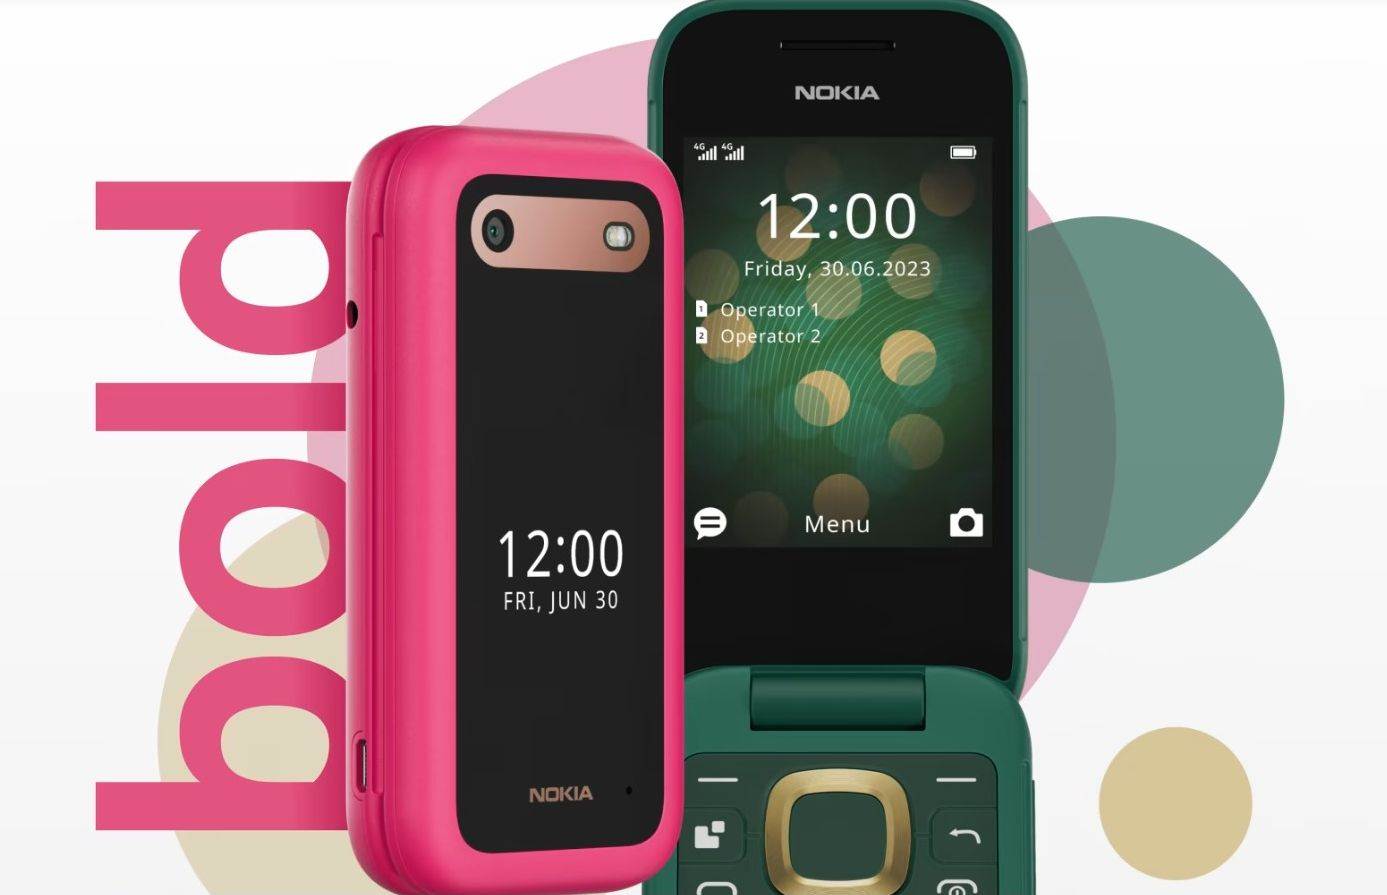  Nokia 2660 Flip (3).jpg 